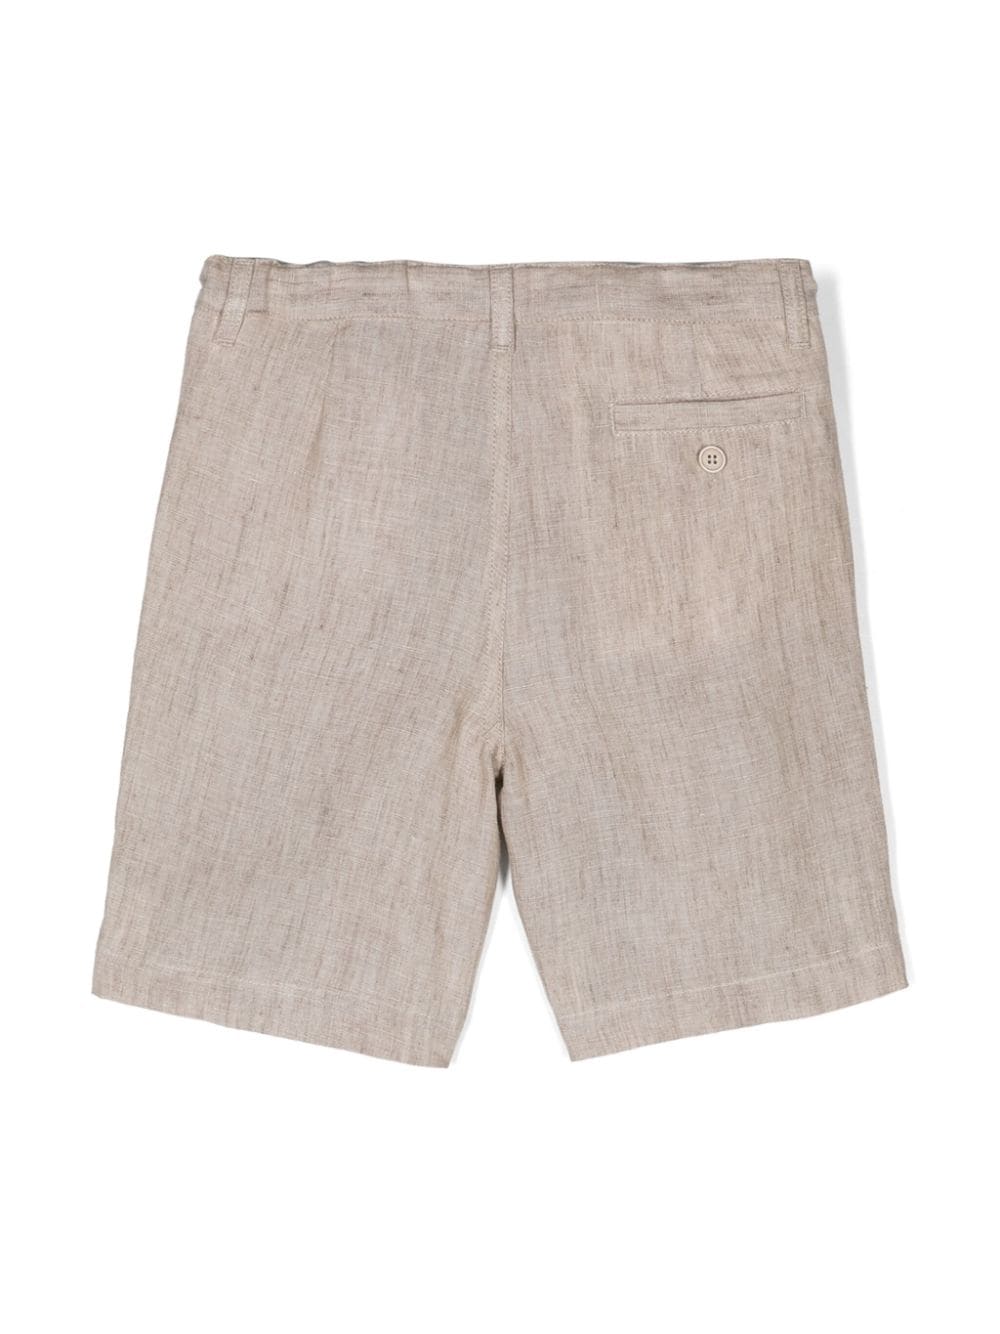 Beige linen Bermuda shorts for boys